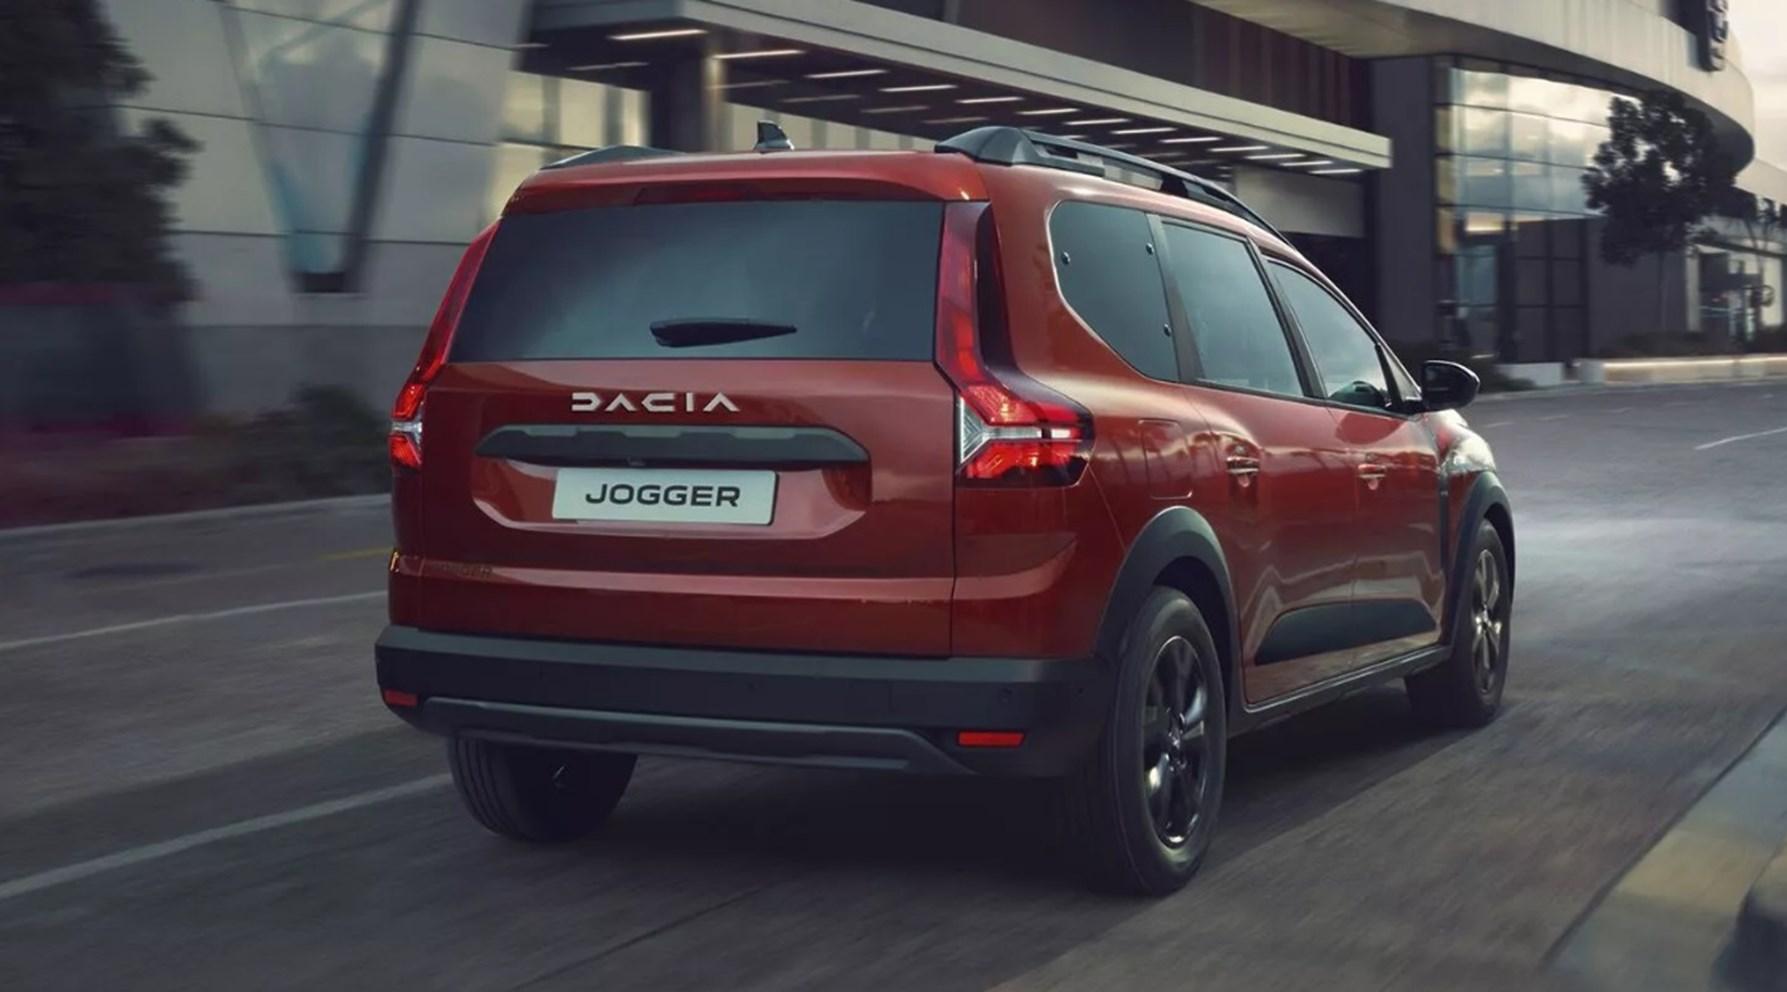 Dacia Jogger: on board the new 7-seater family car - Site media